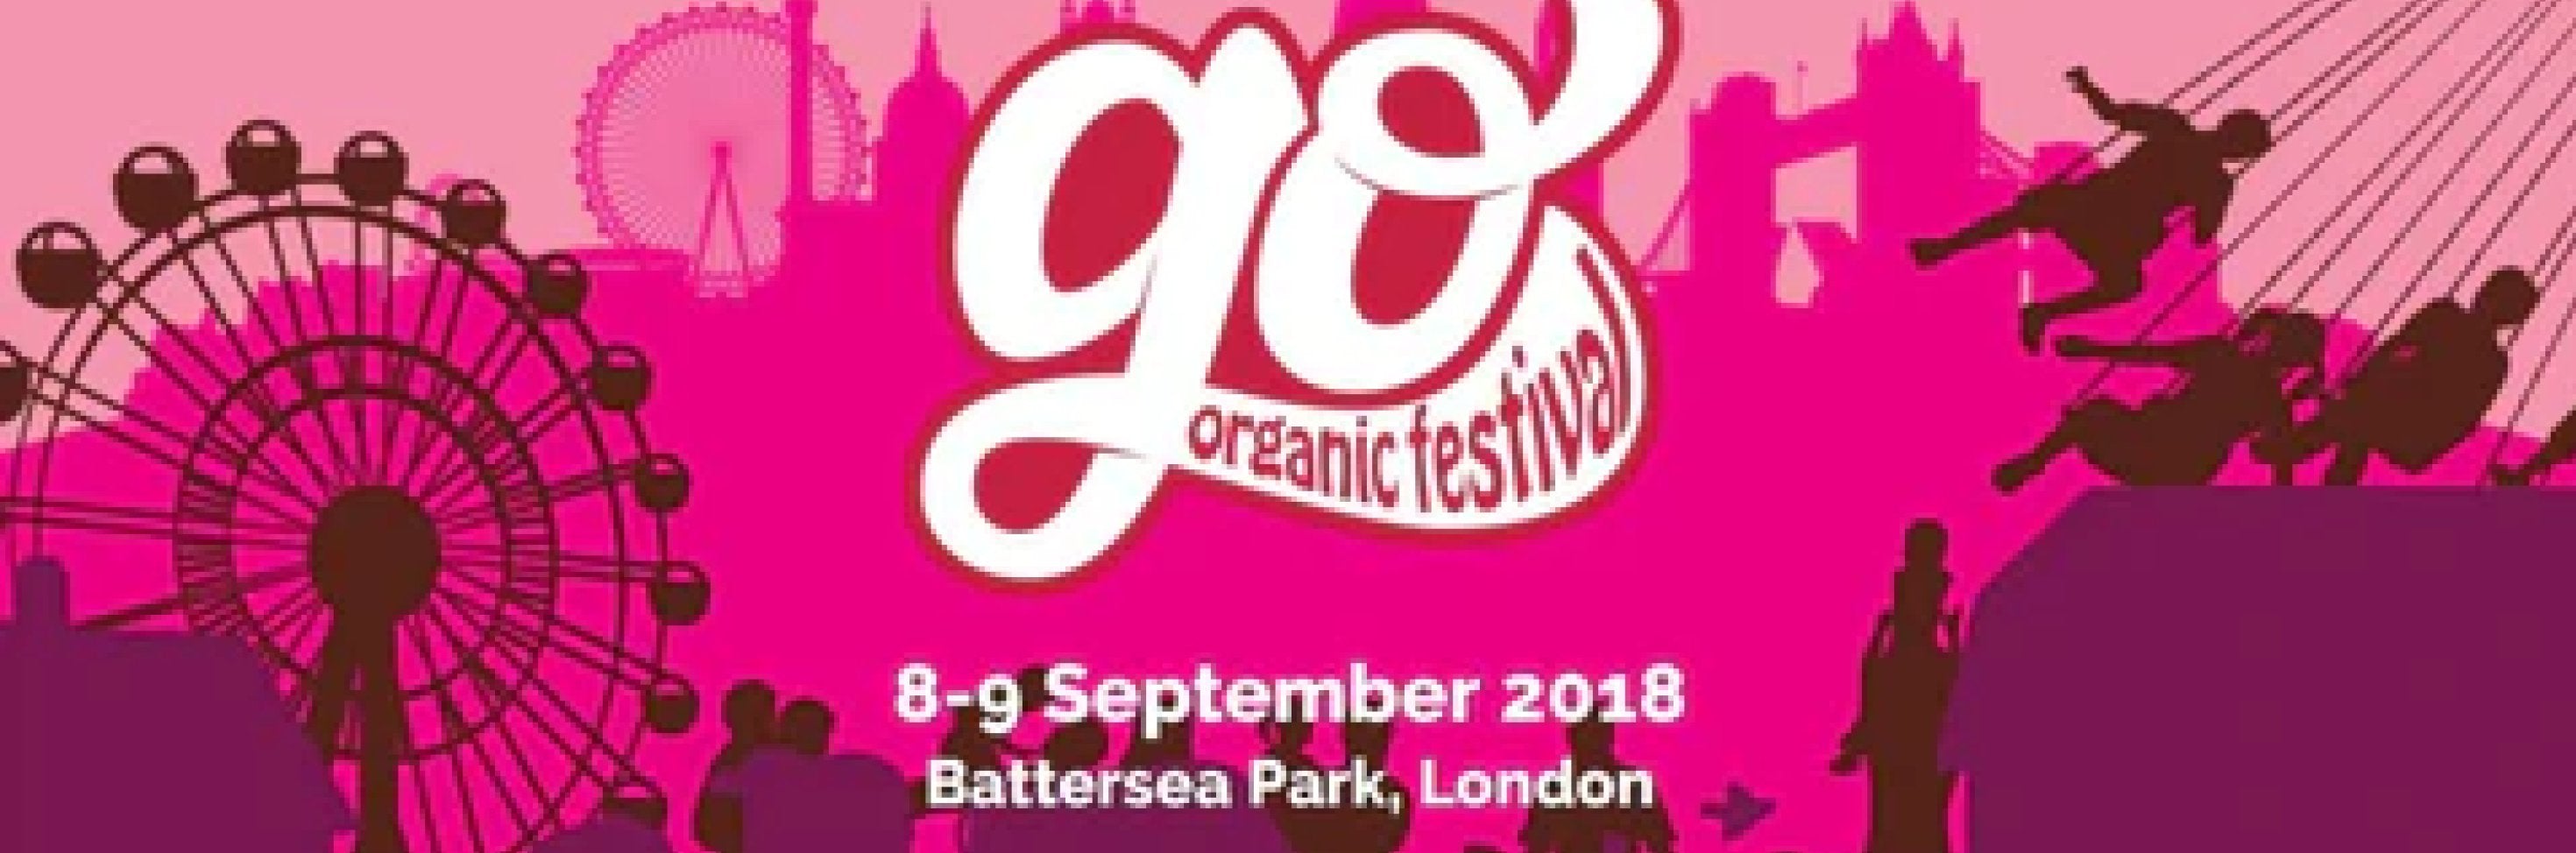 Bird & Wild to feature at Go Organic Show, Battersea Park, 8-9 September 2018 - Bird & Wild Coffee